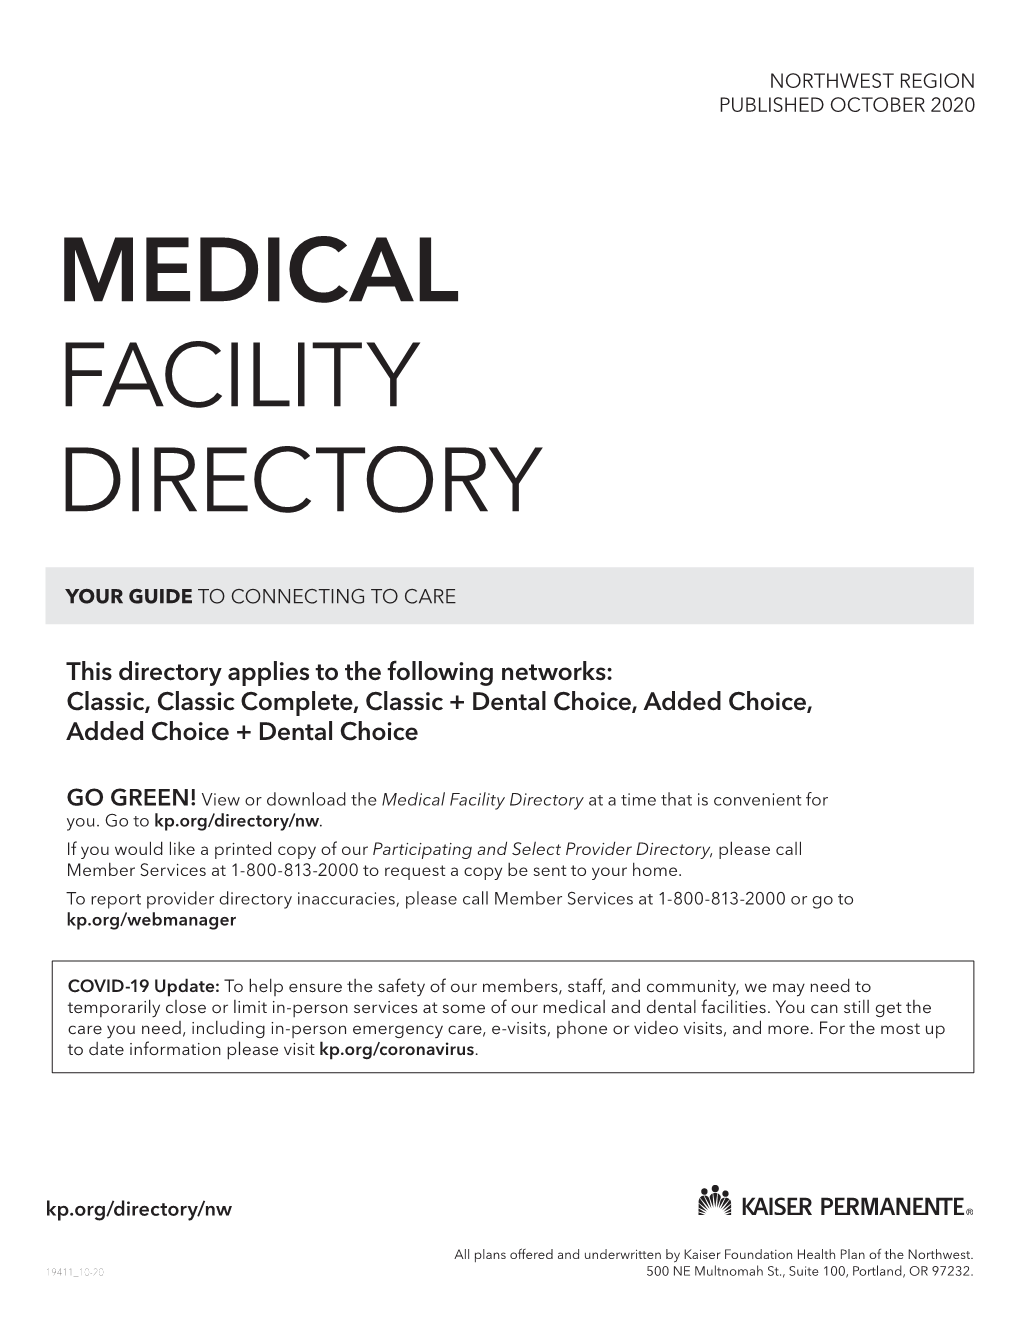 Medical Facility Directory